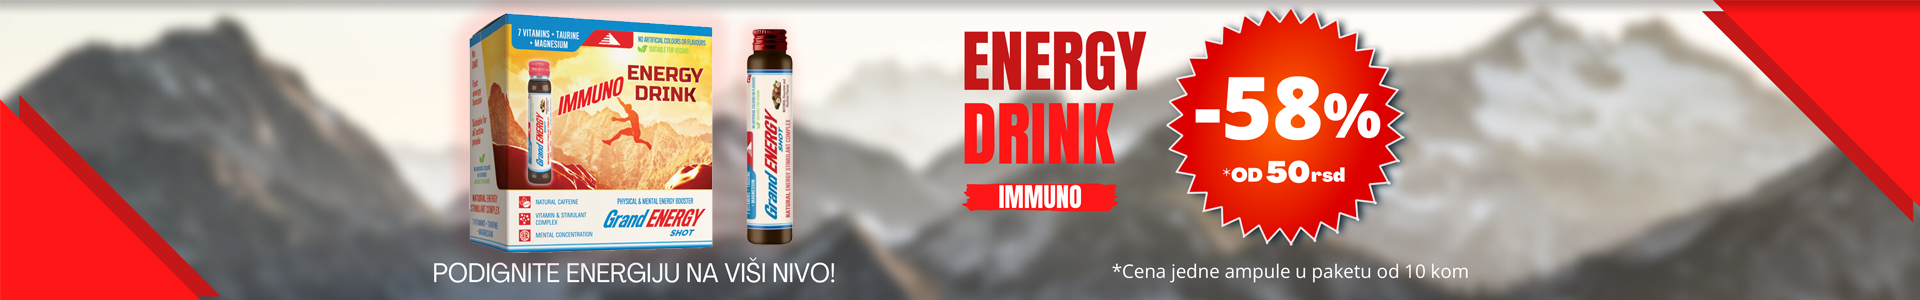 Energy Drink Immuno